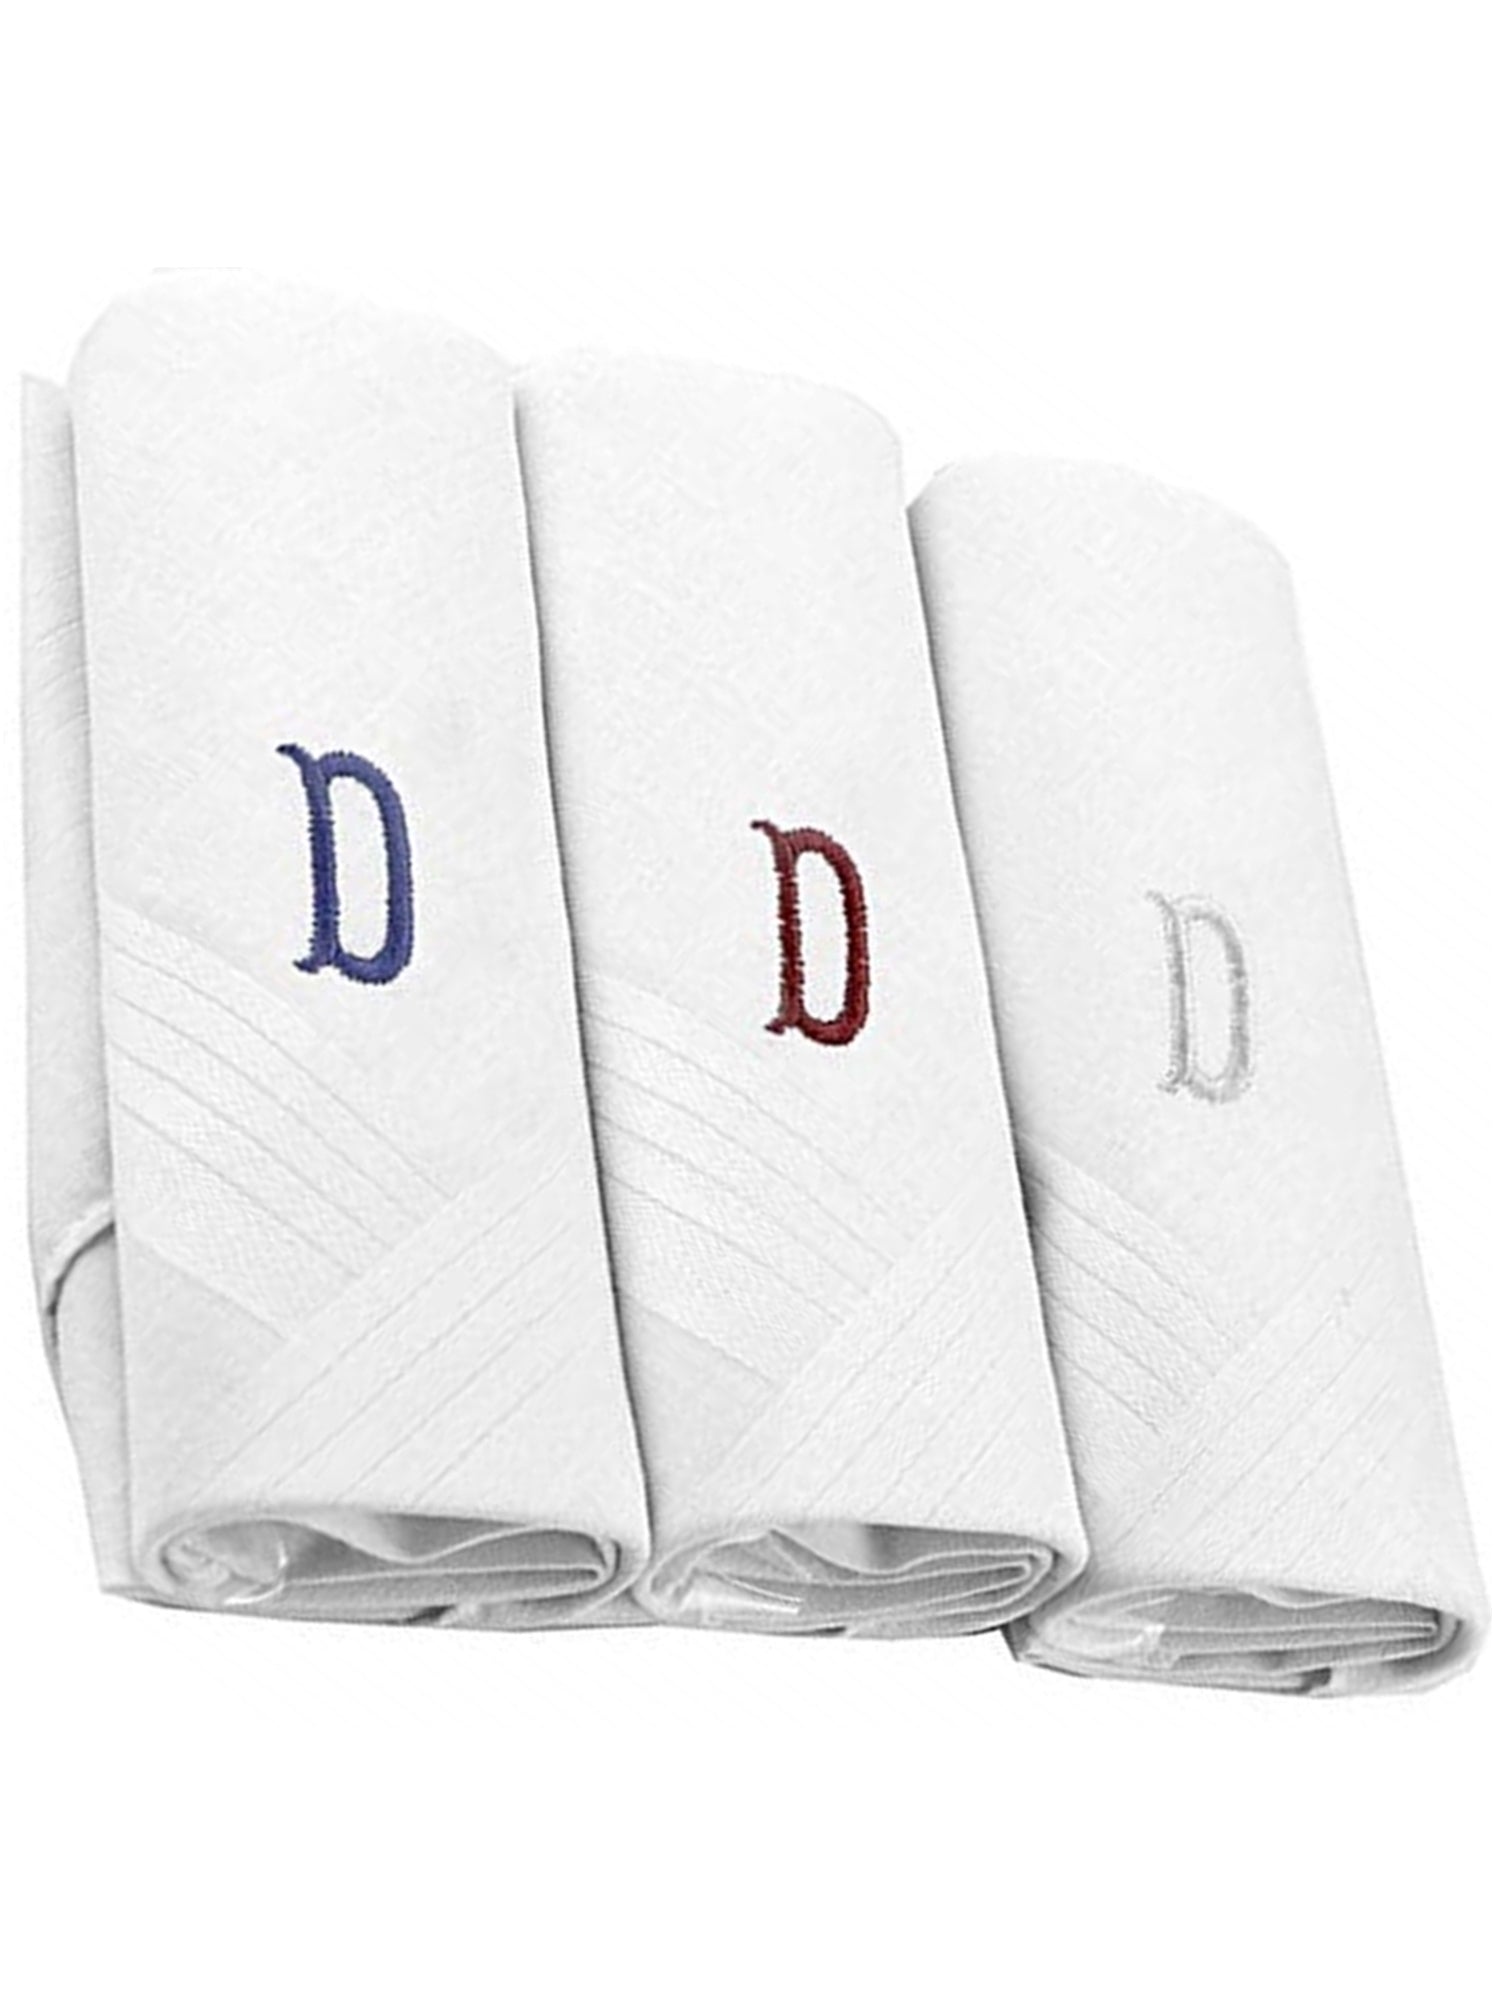 Men's Cotton Monogrammed Handkerchiefs Initial Letter Hanky Handkerchiefs TheDapperTie White D 2 x 3 Pack  